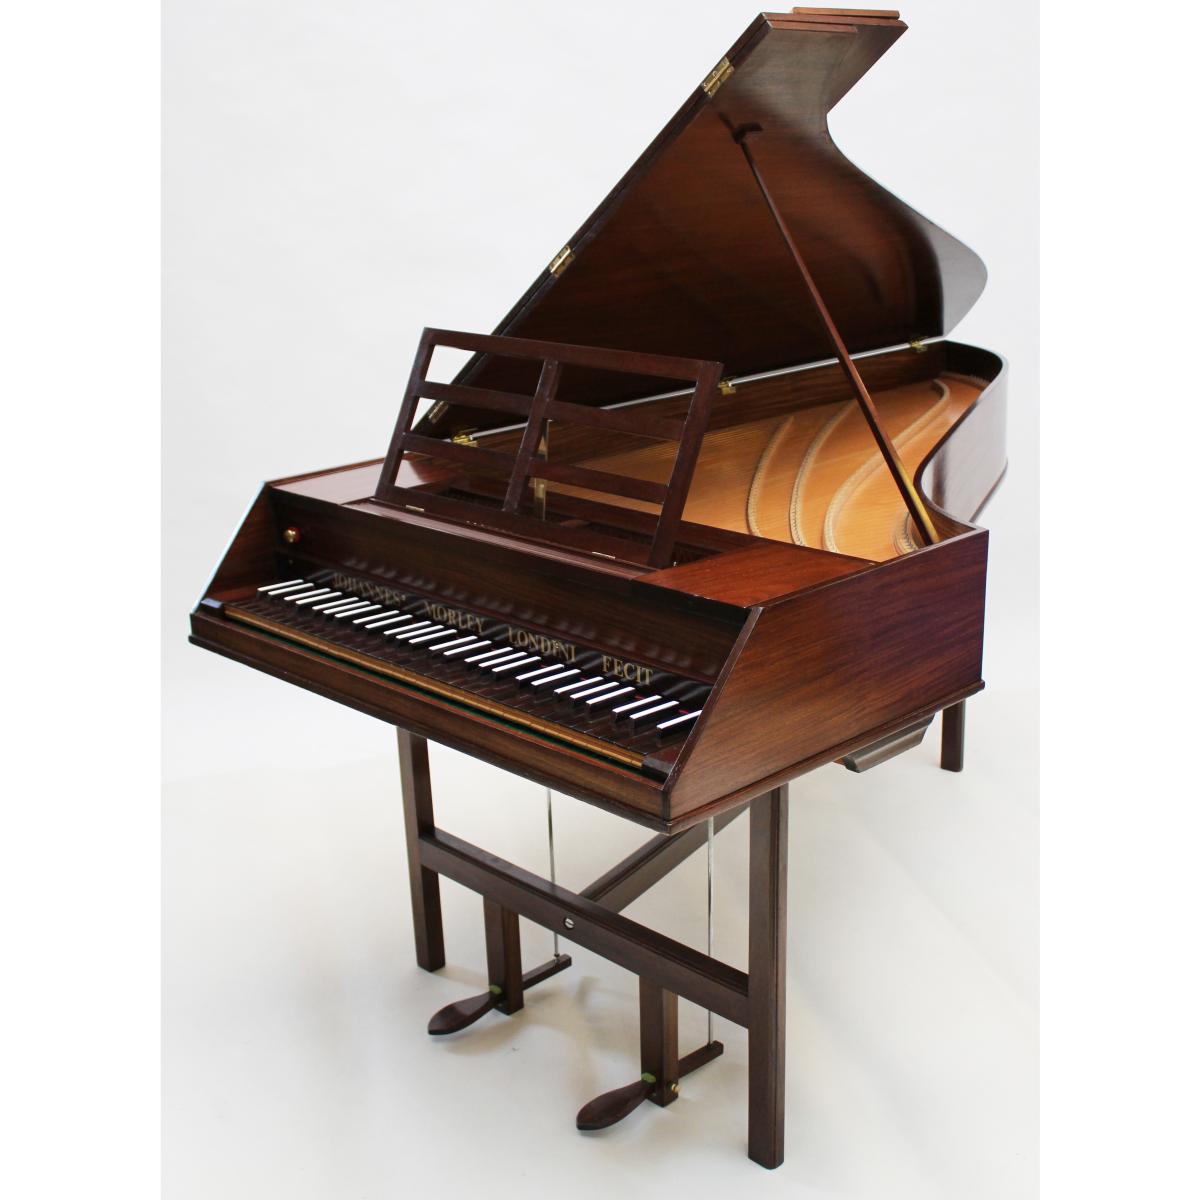 John Morley single manual harpsichord open